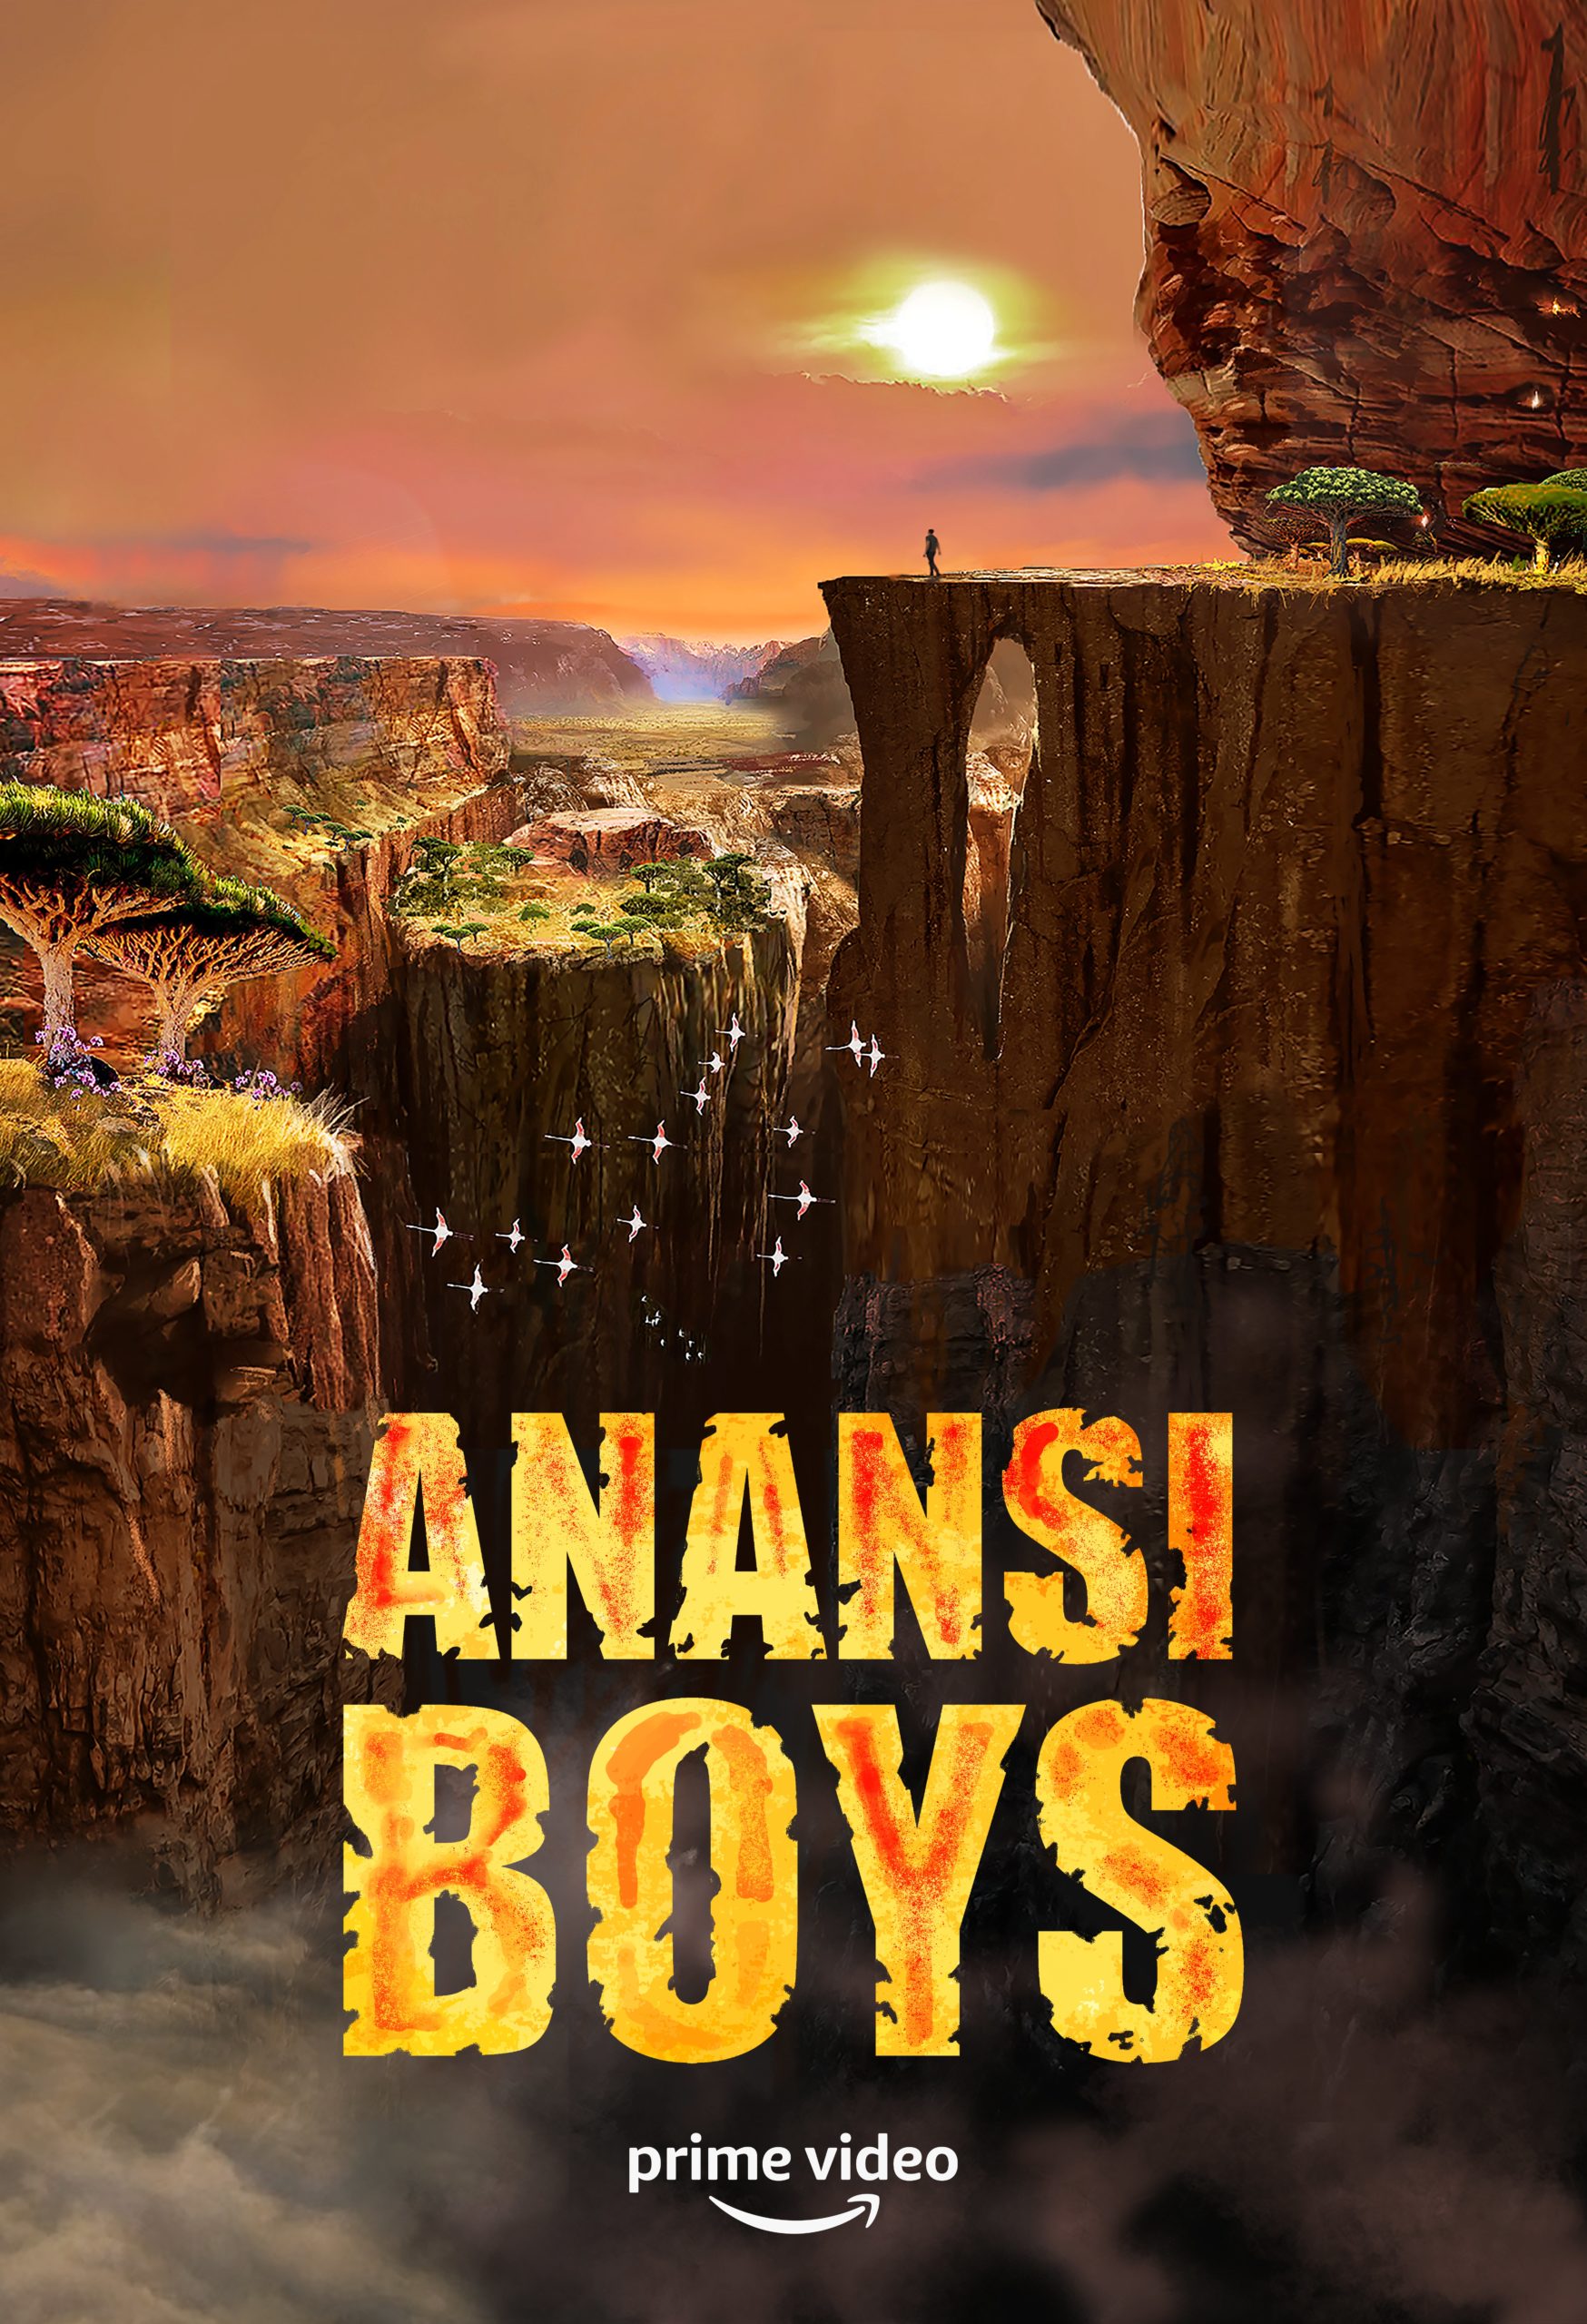 A poster for Anansi Boys. (Image: Amazon Studios)